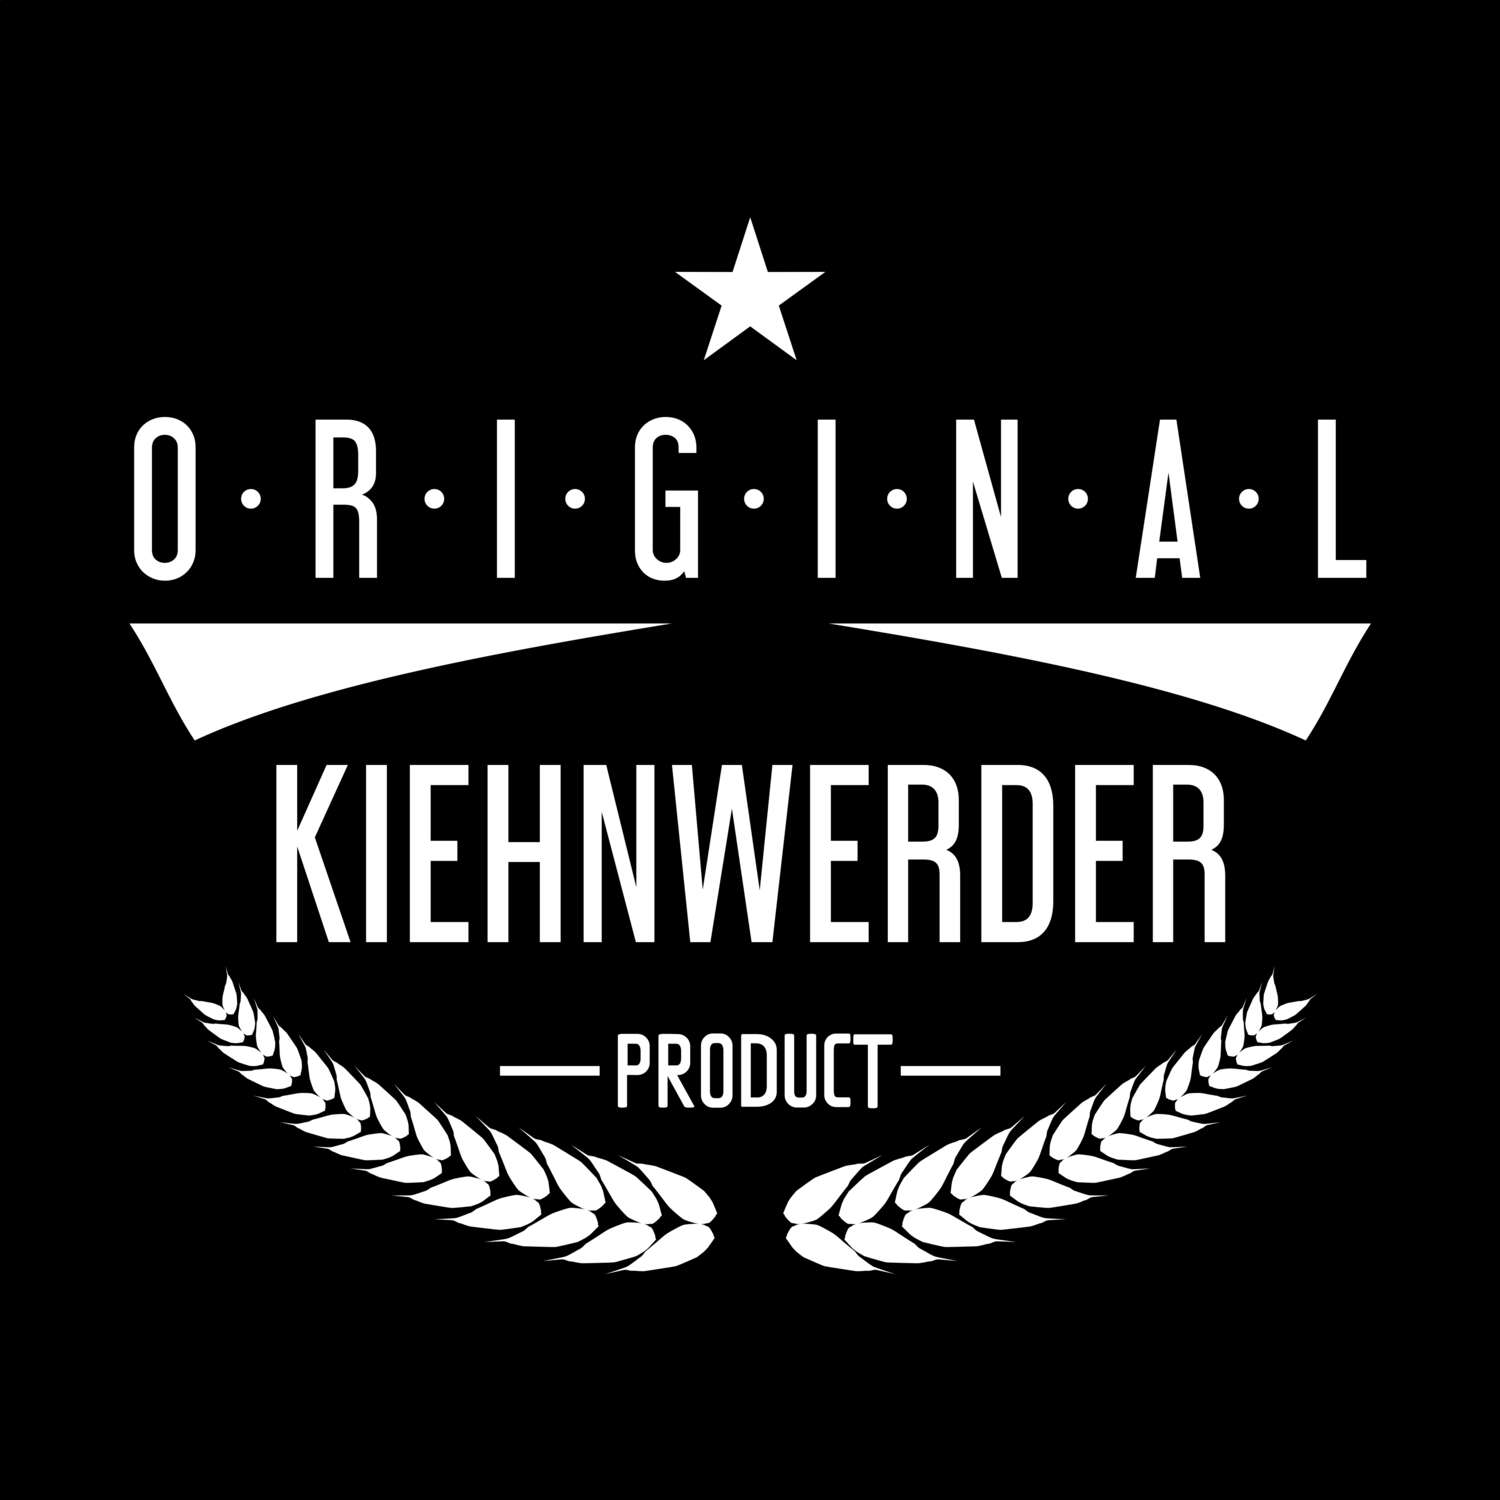 Kiehnwerder T-Shirt »Original Product«